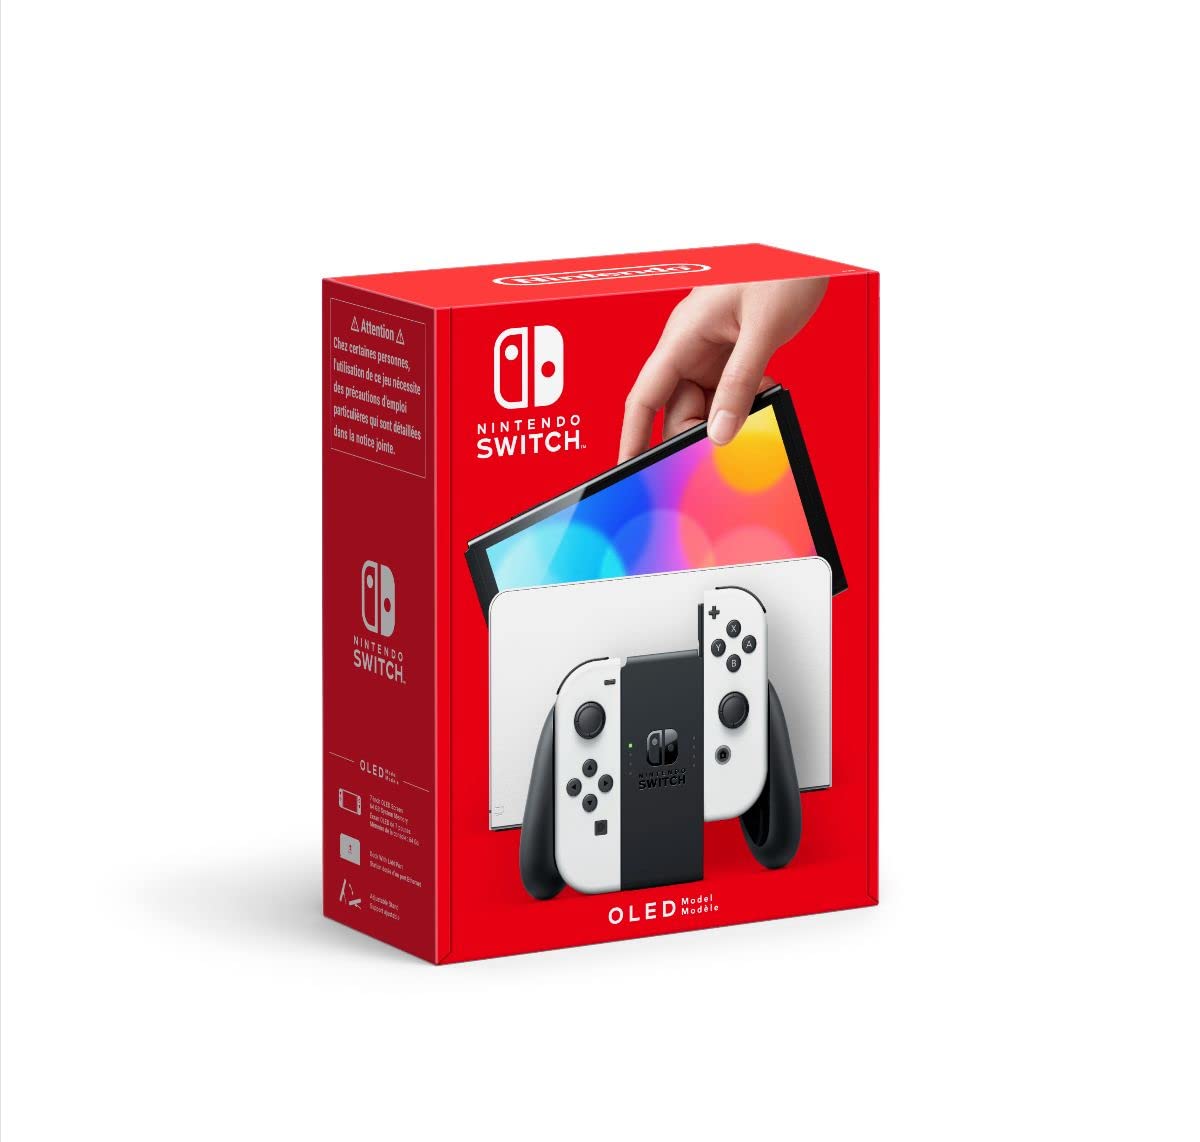 White variant of the Nintendo Switch OLED model.